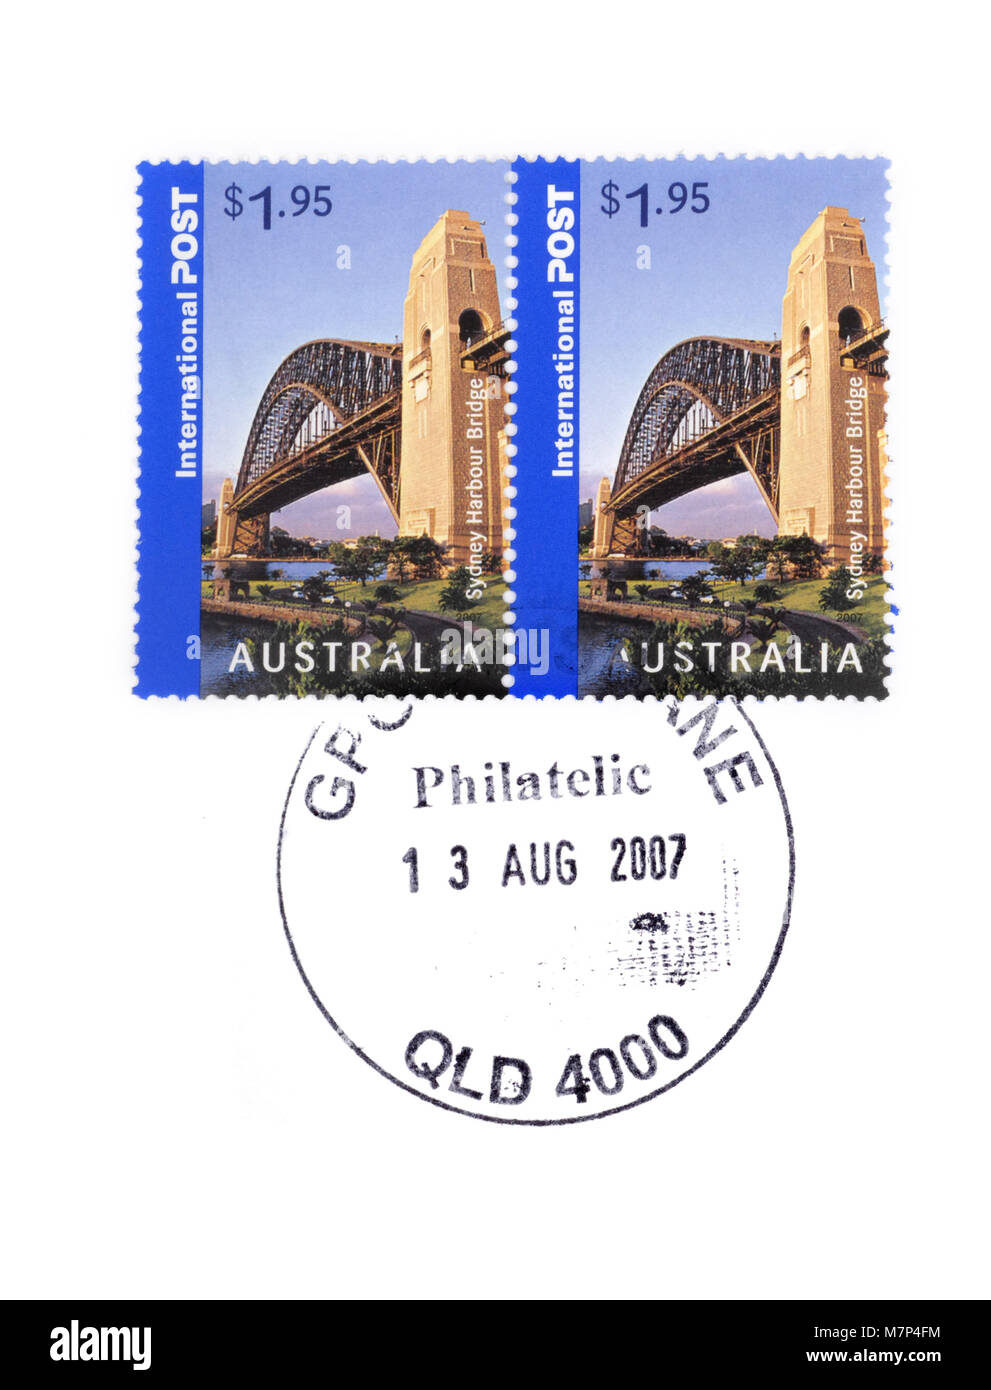 Sellos de ultramar australiano cancelado por mano en Brisbane, oficina de correos. Foto de stock